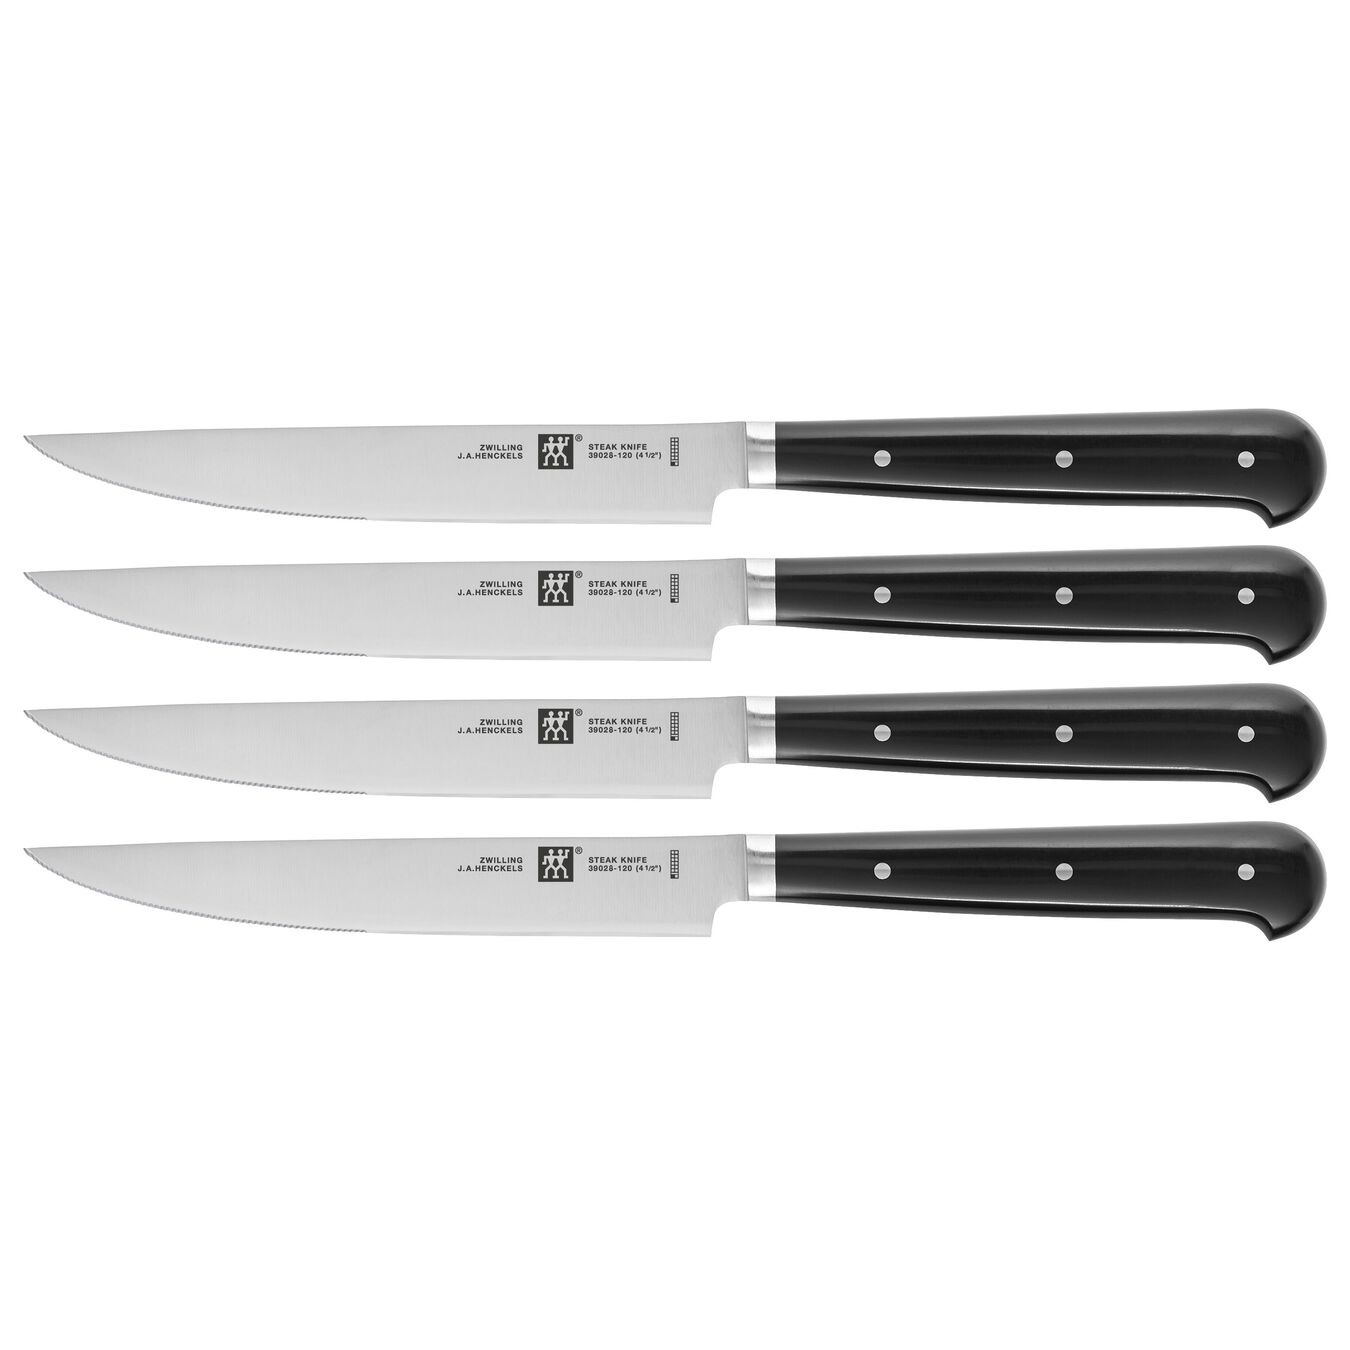 Набор стейковых ножей Zwilling 39029-002 4 предмета набор керамических ножей 4 предмета zanussi milano znc32220df